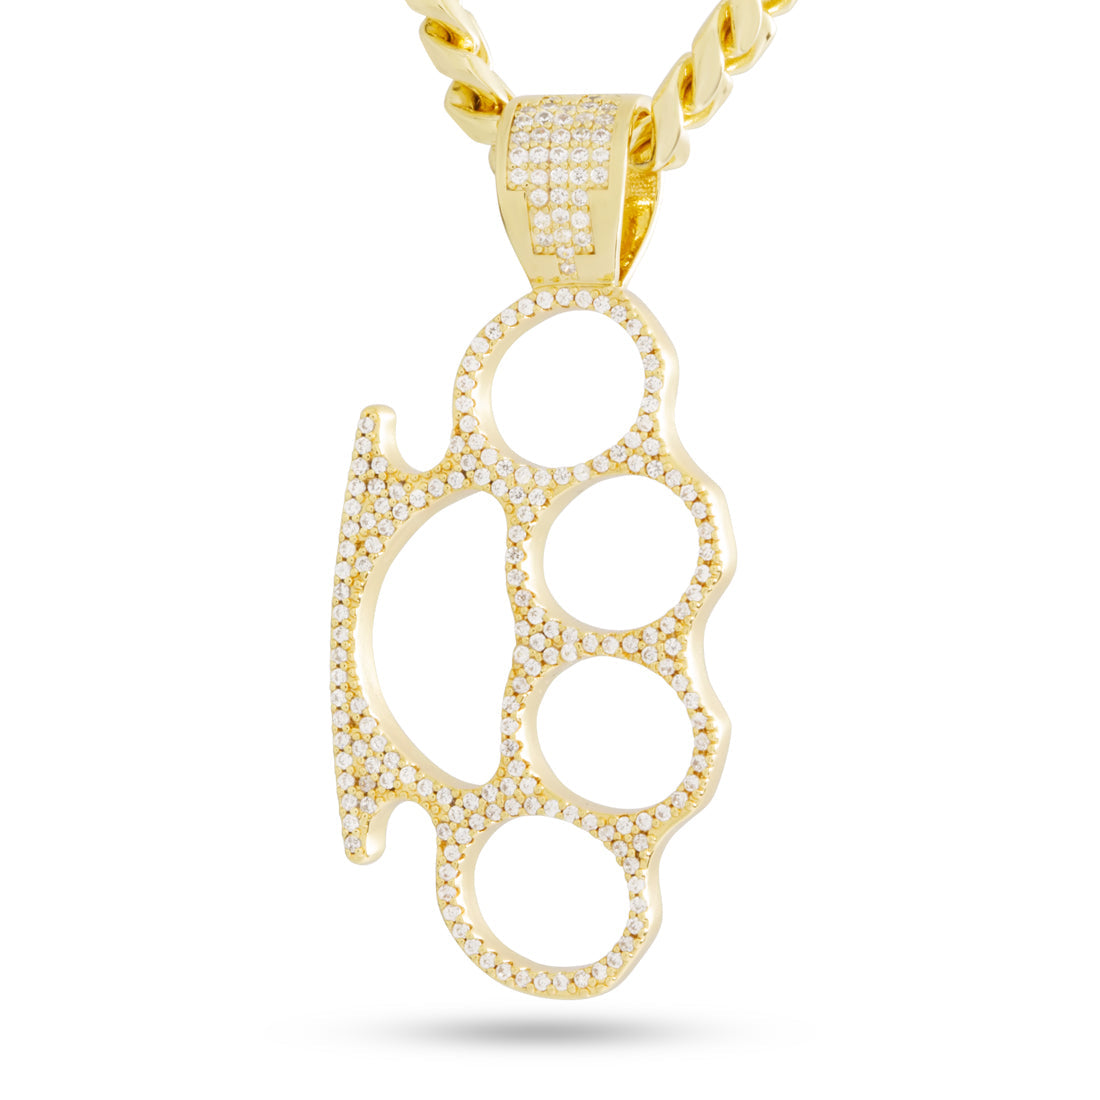 Rose Necklace Brutal Brass Knuckles Pendant w Swarovski Crystal Jewelry  Controse | eBay